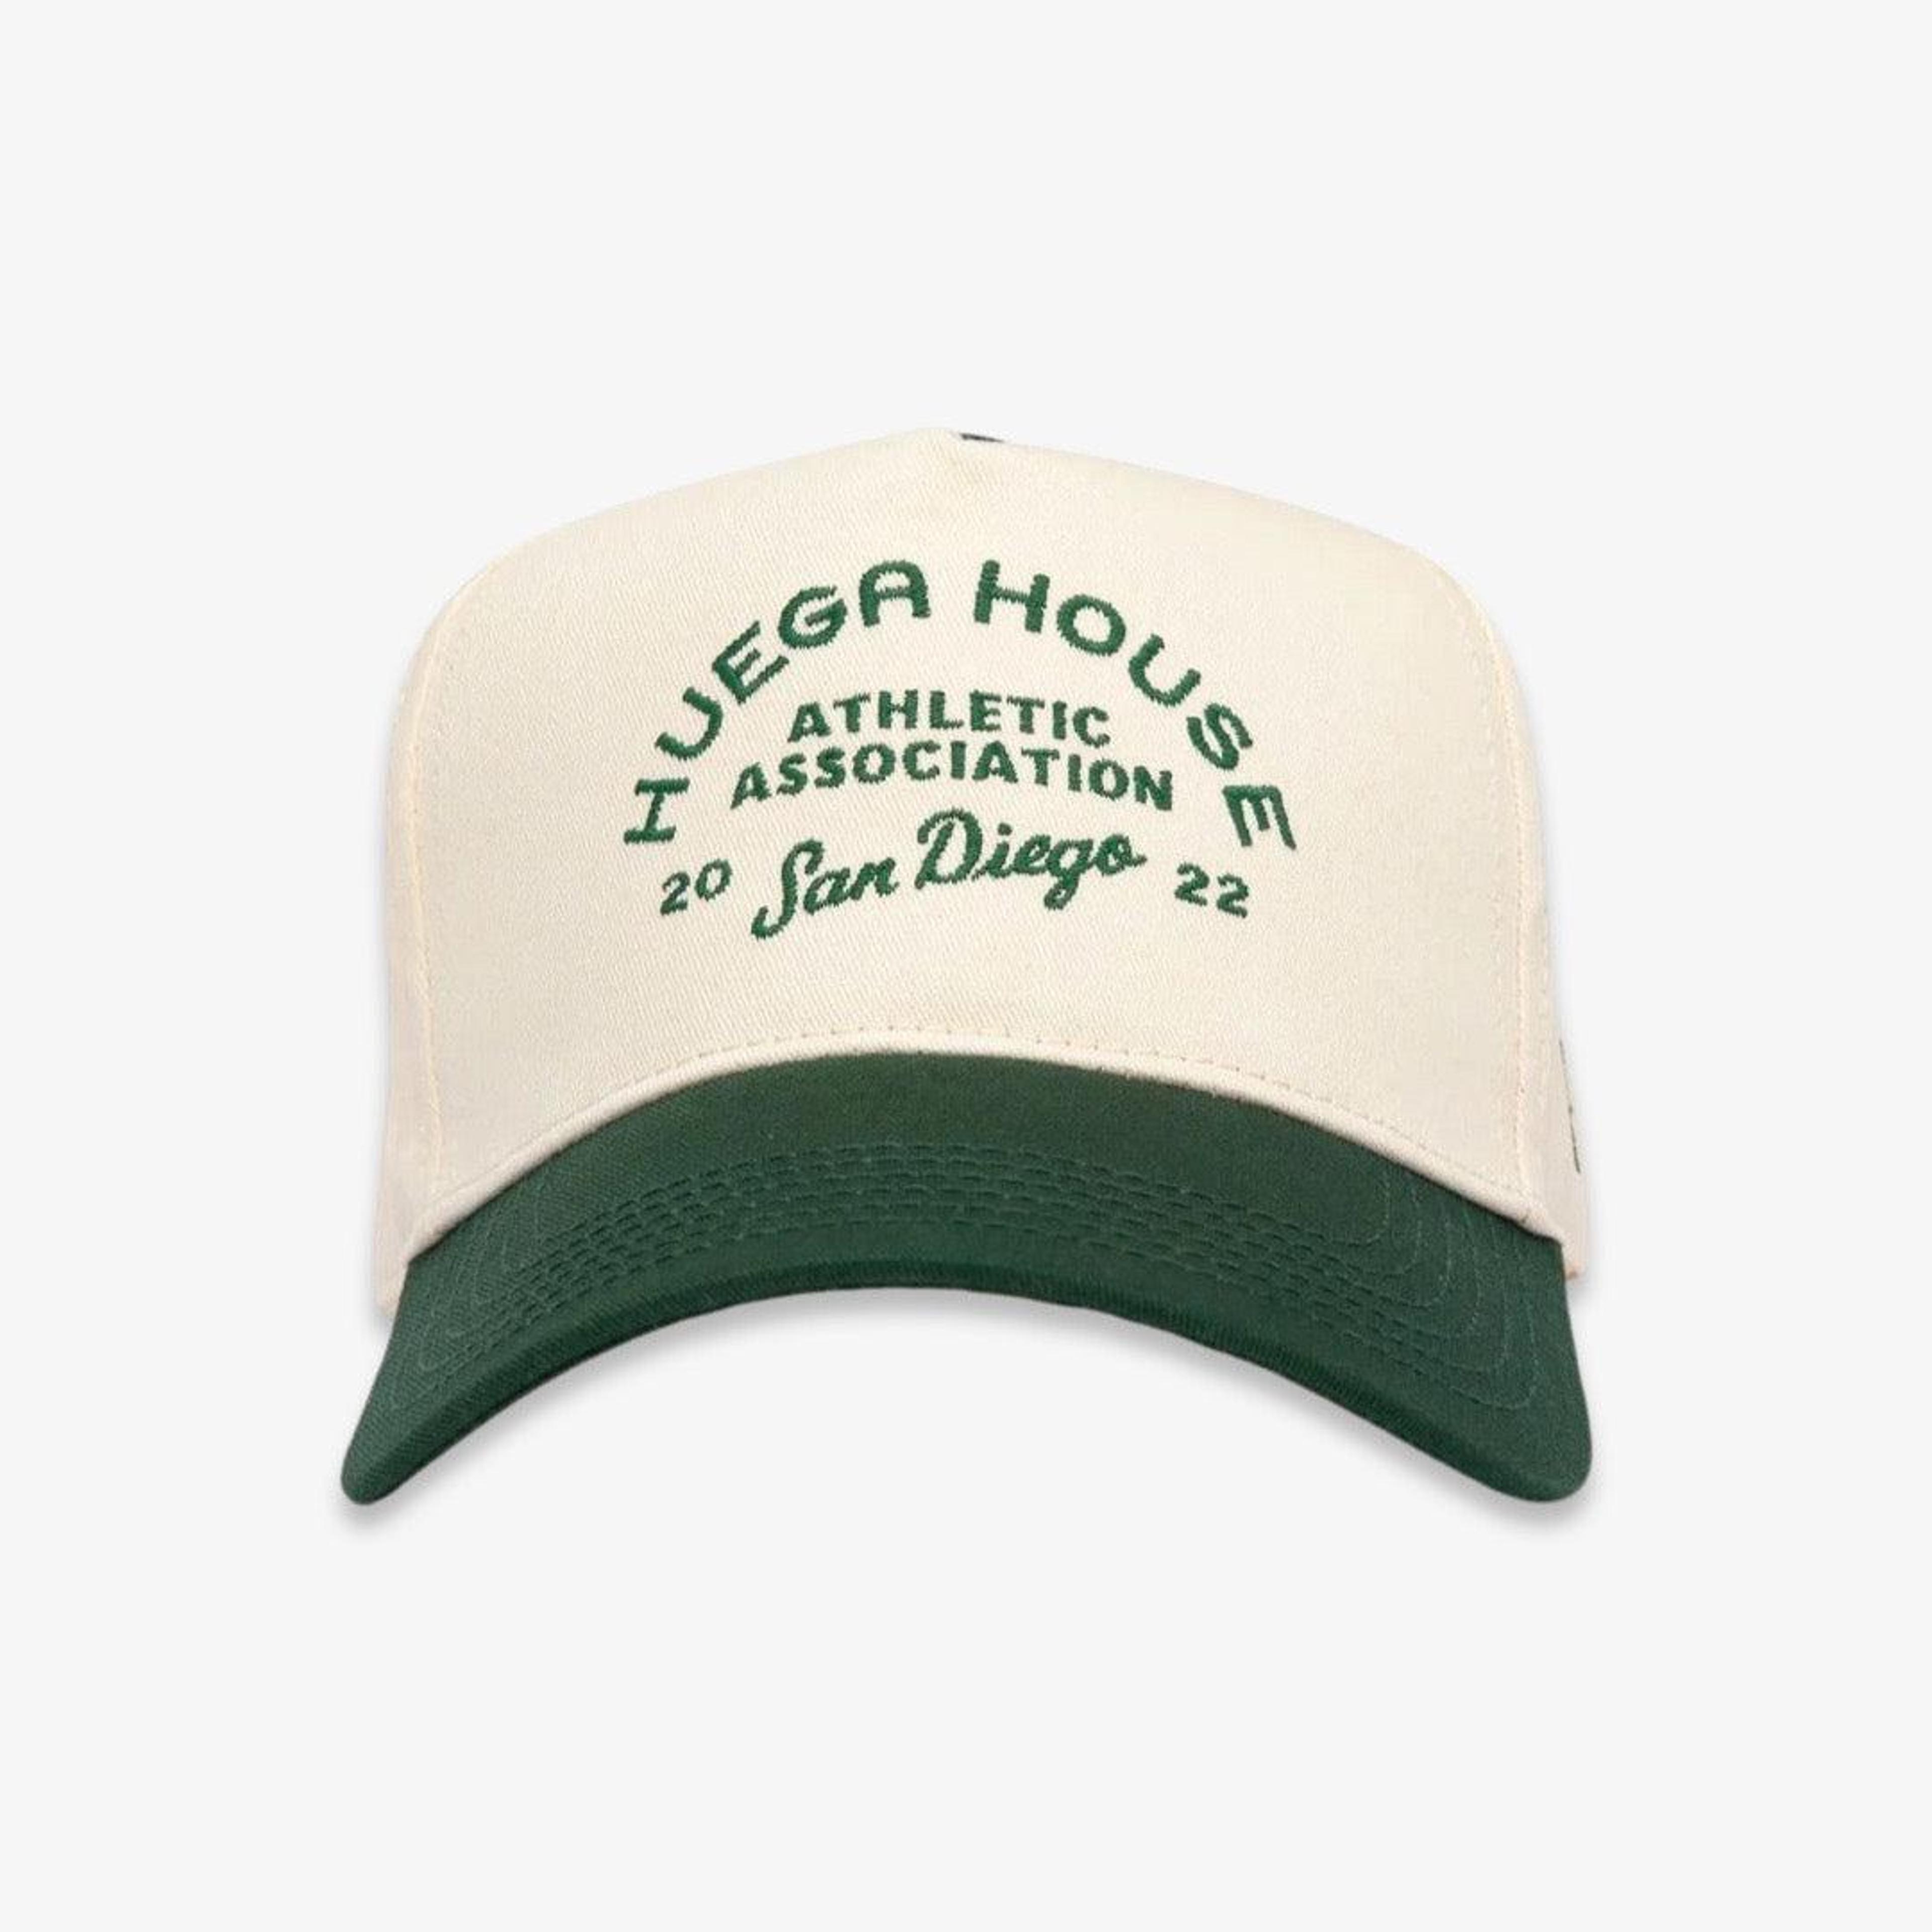 Alternate View 1 of Huega House 'Athletic Association' 2-Tone 5-Panel Snapback Hat G